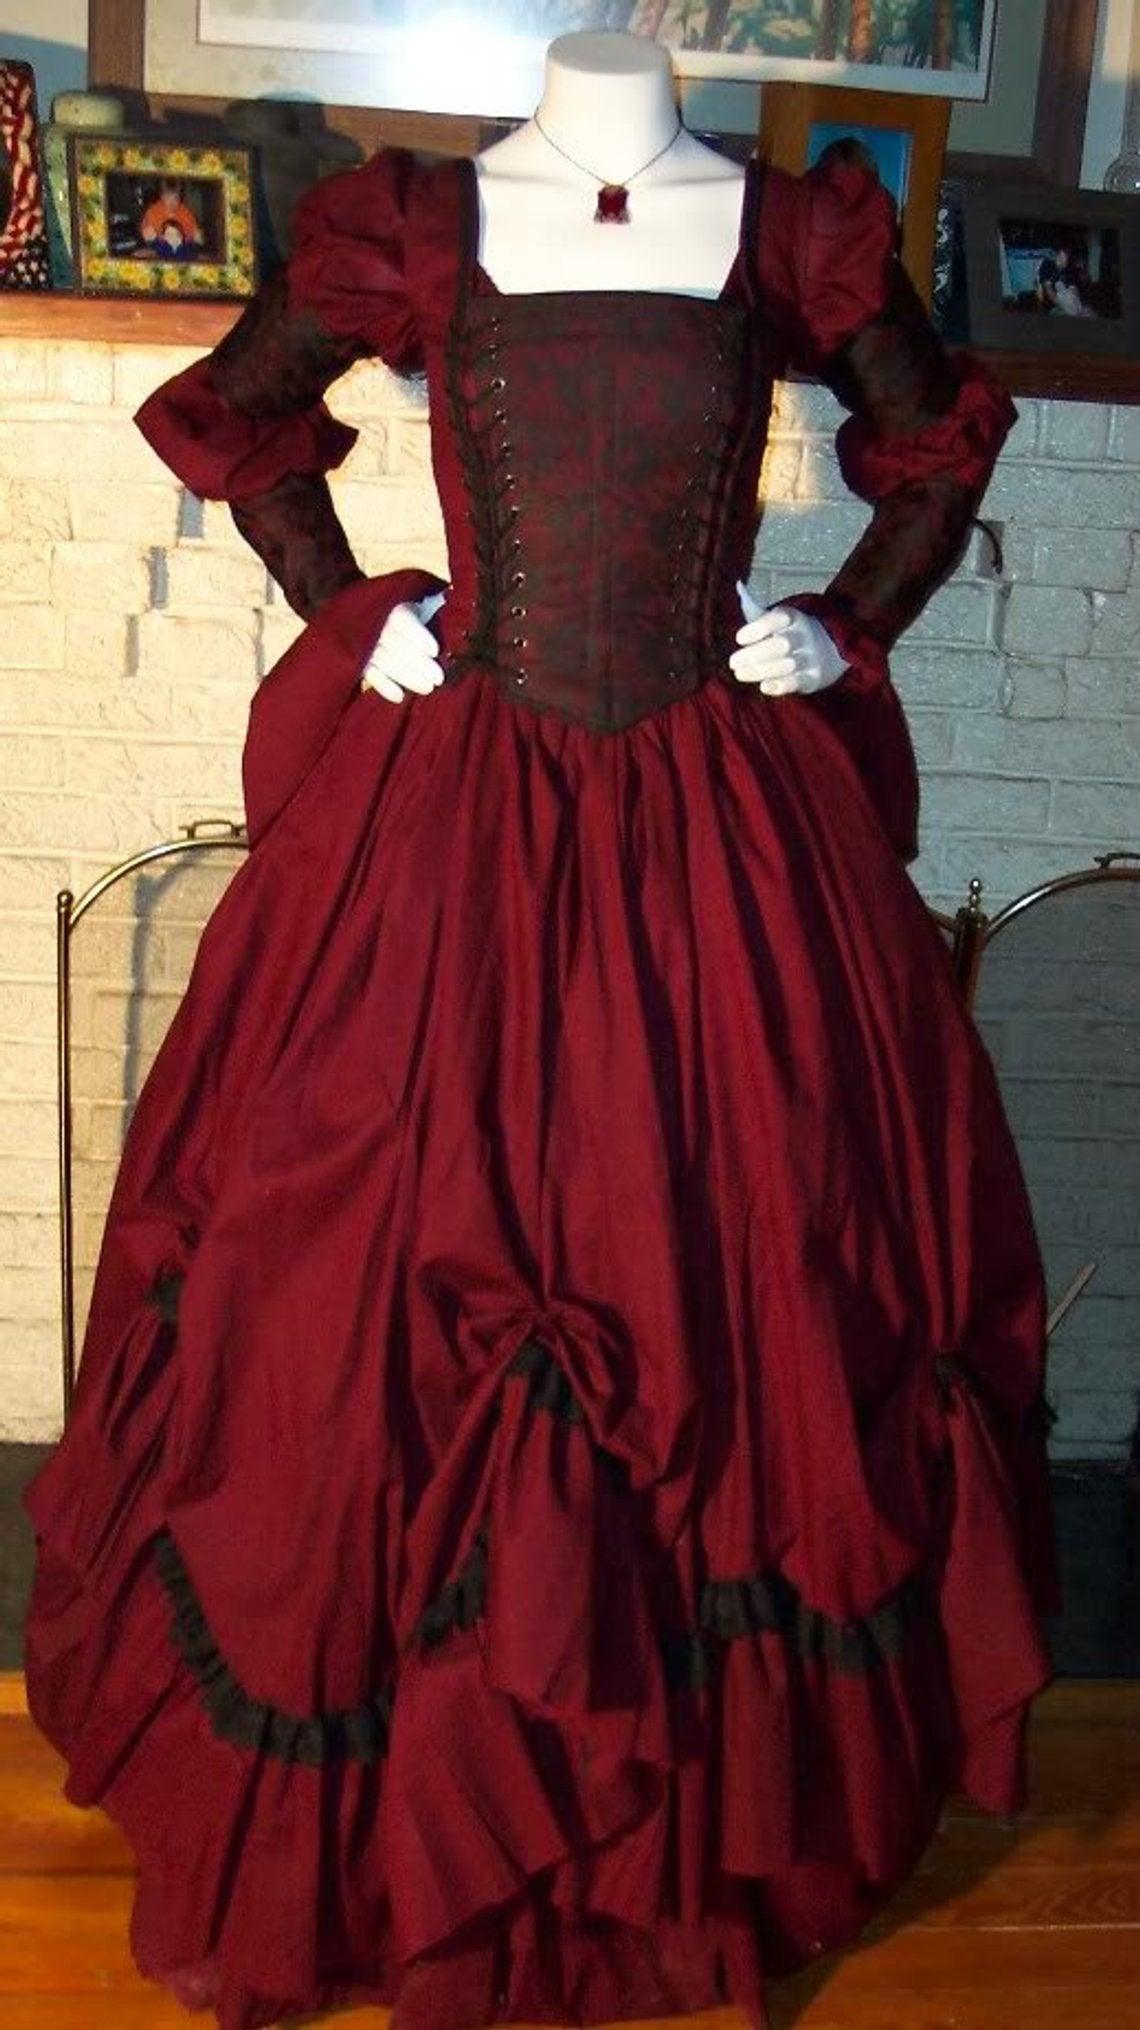 VAMPIRE 18th Century Historical Dress Ensemble costume 